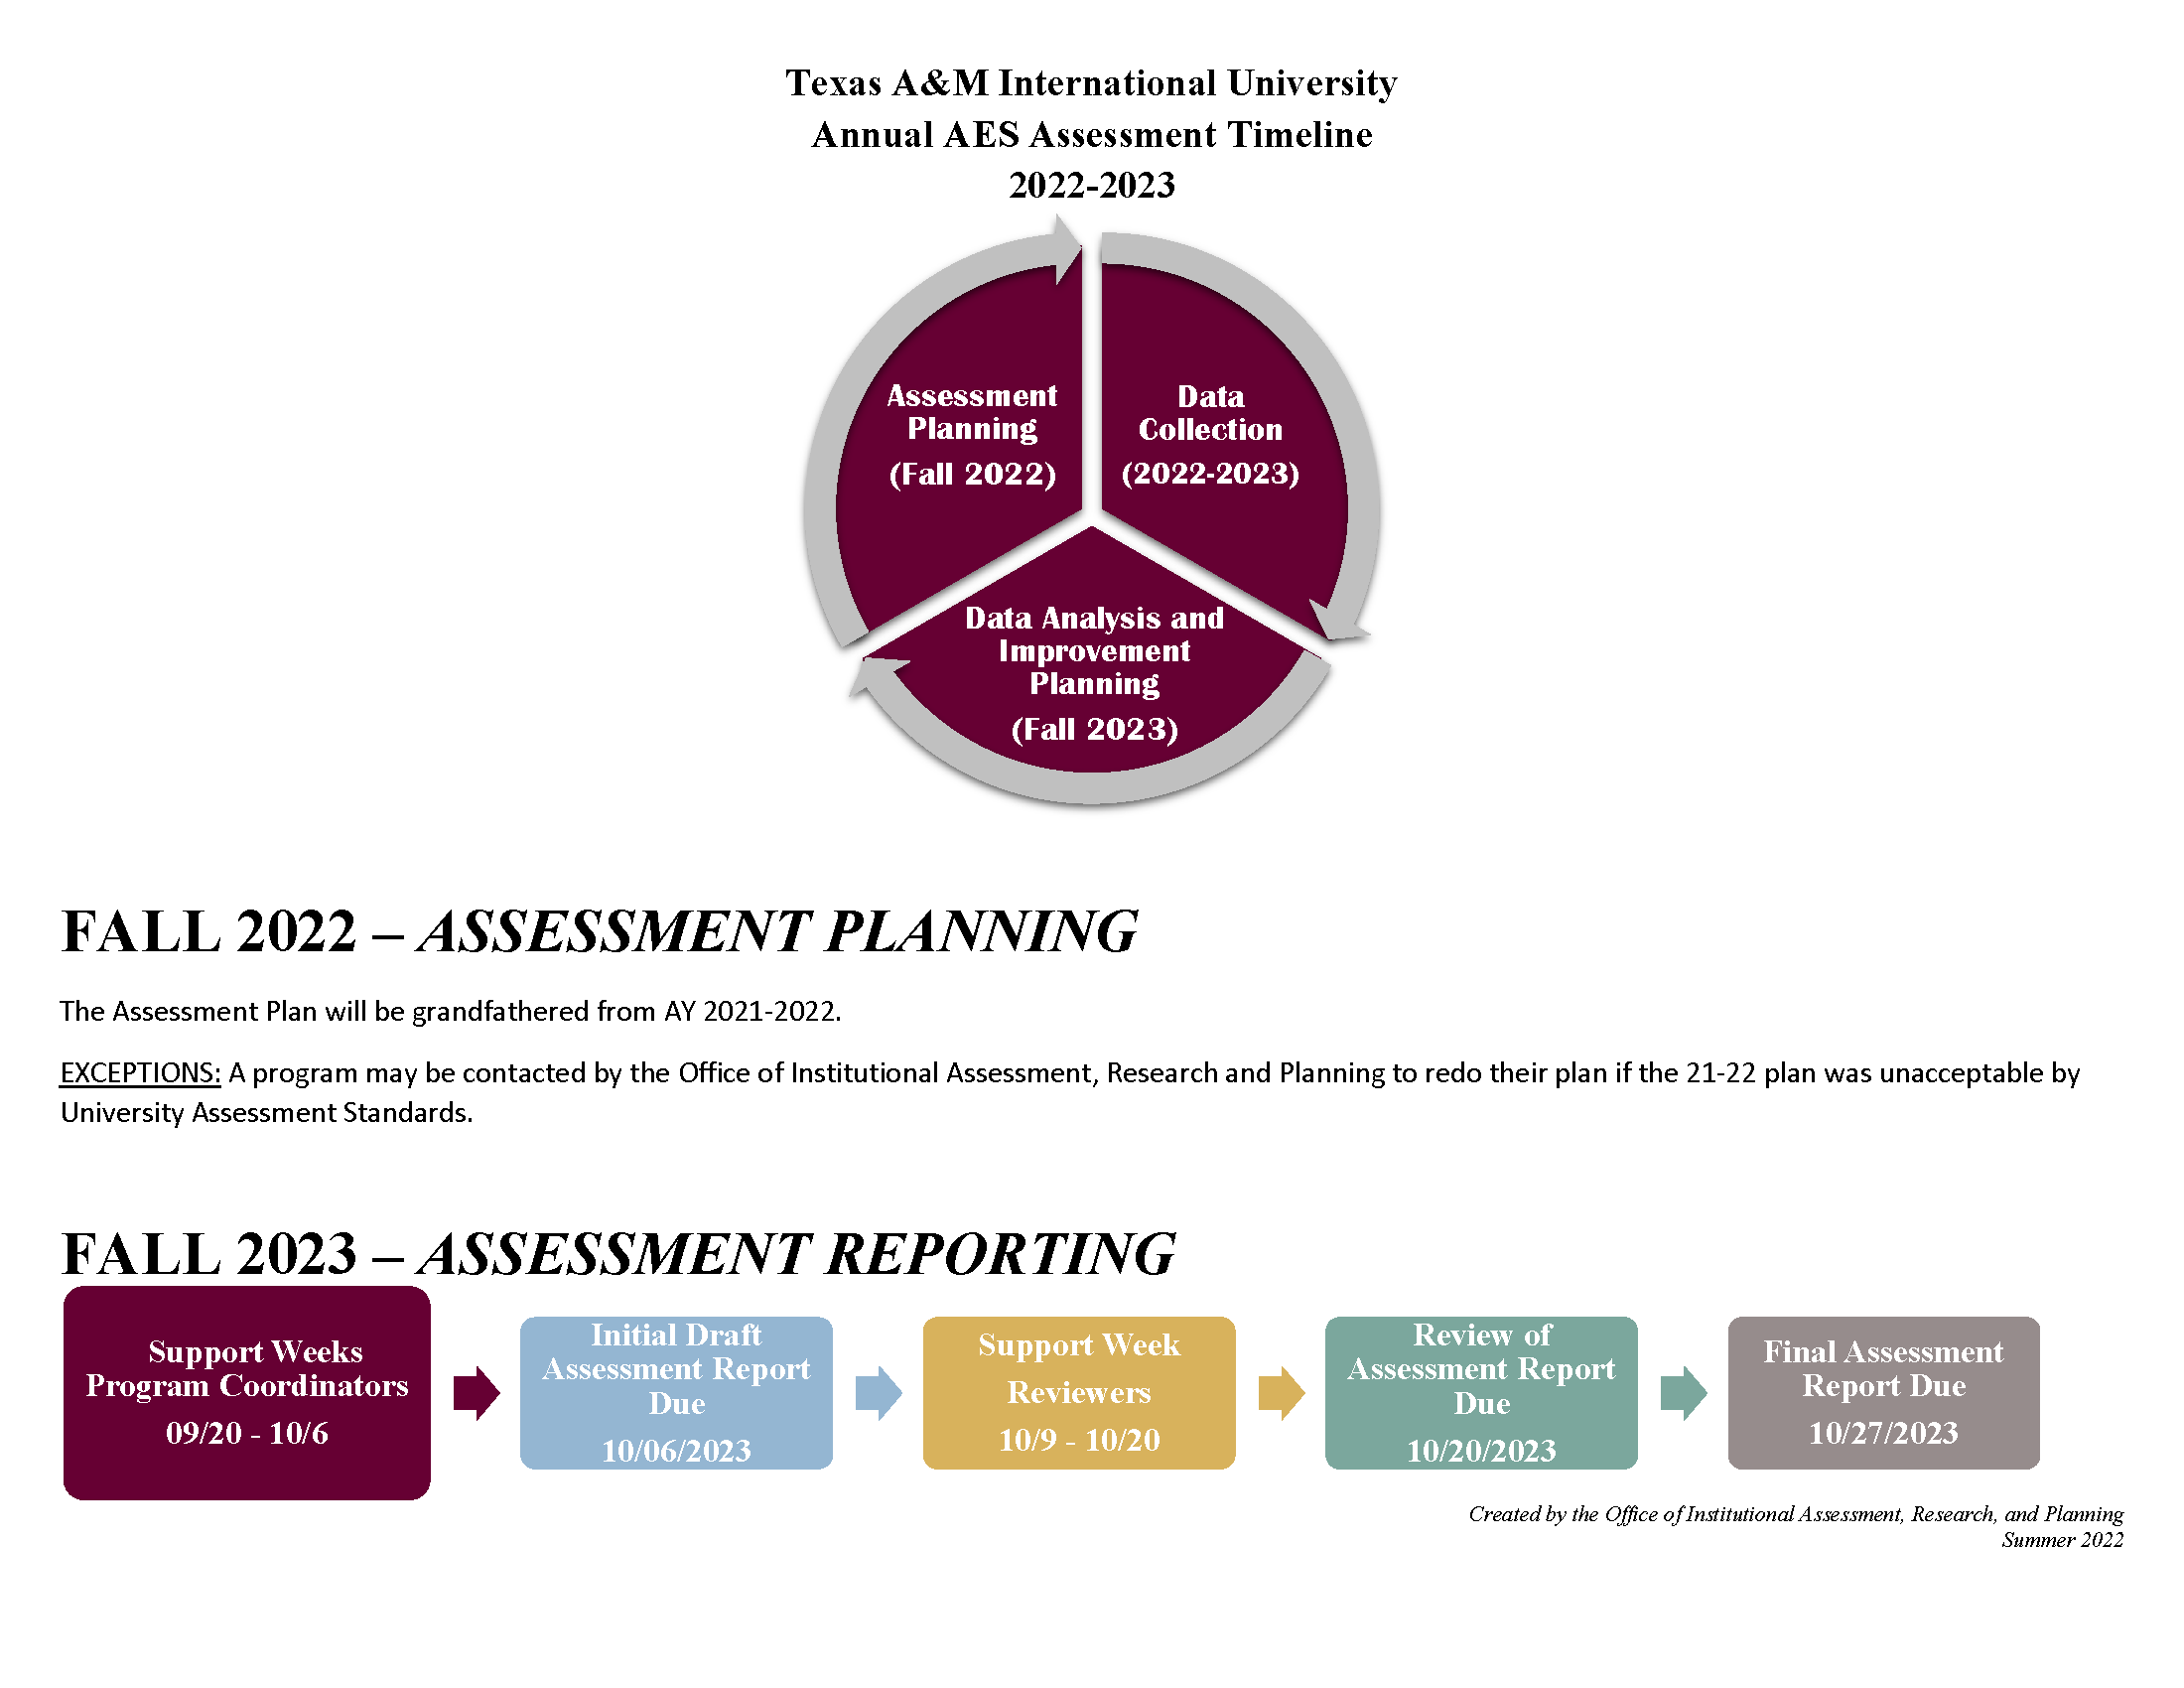 2022-2023 AES Assessment Timeline Pic